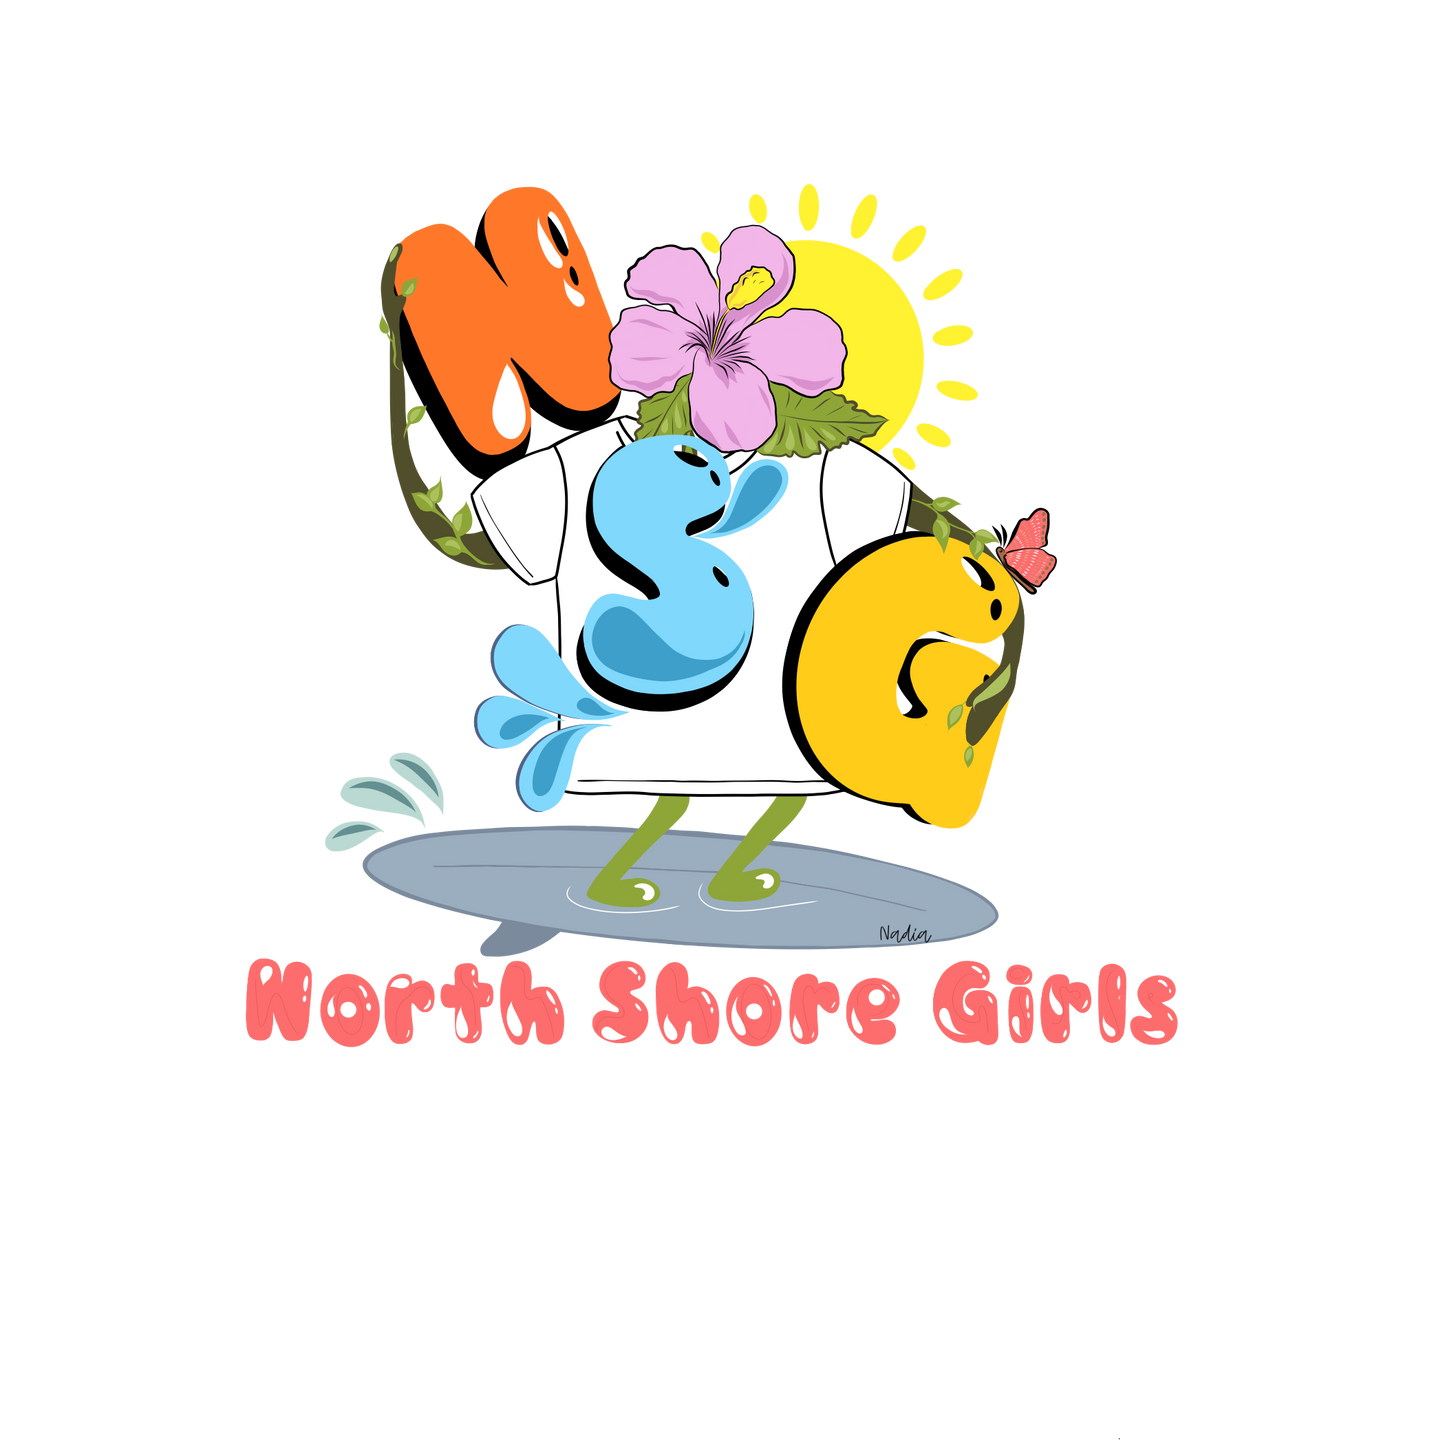 NSG North Shore Girls hand-drawn logo